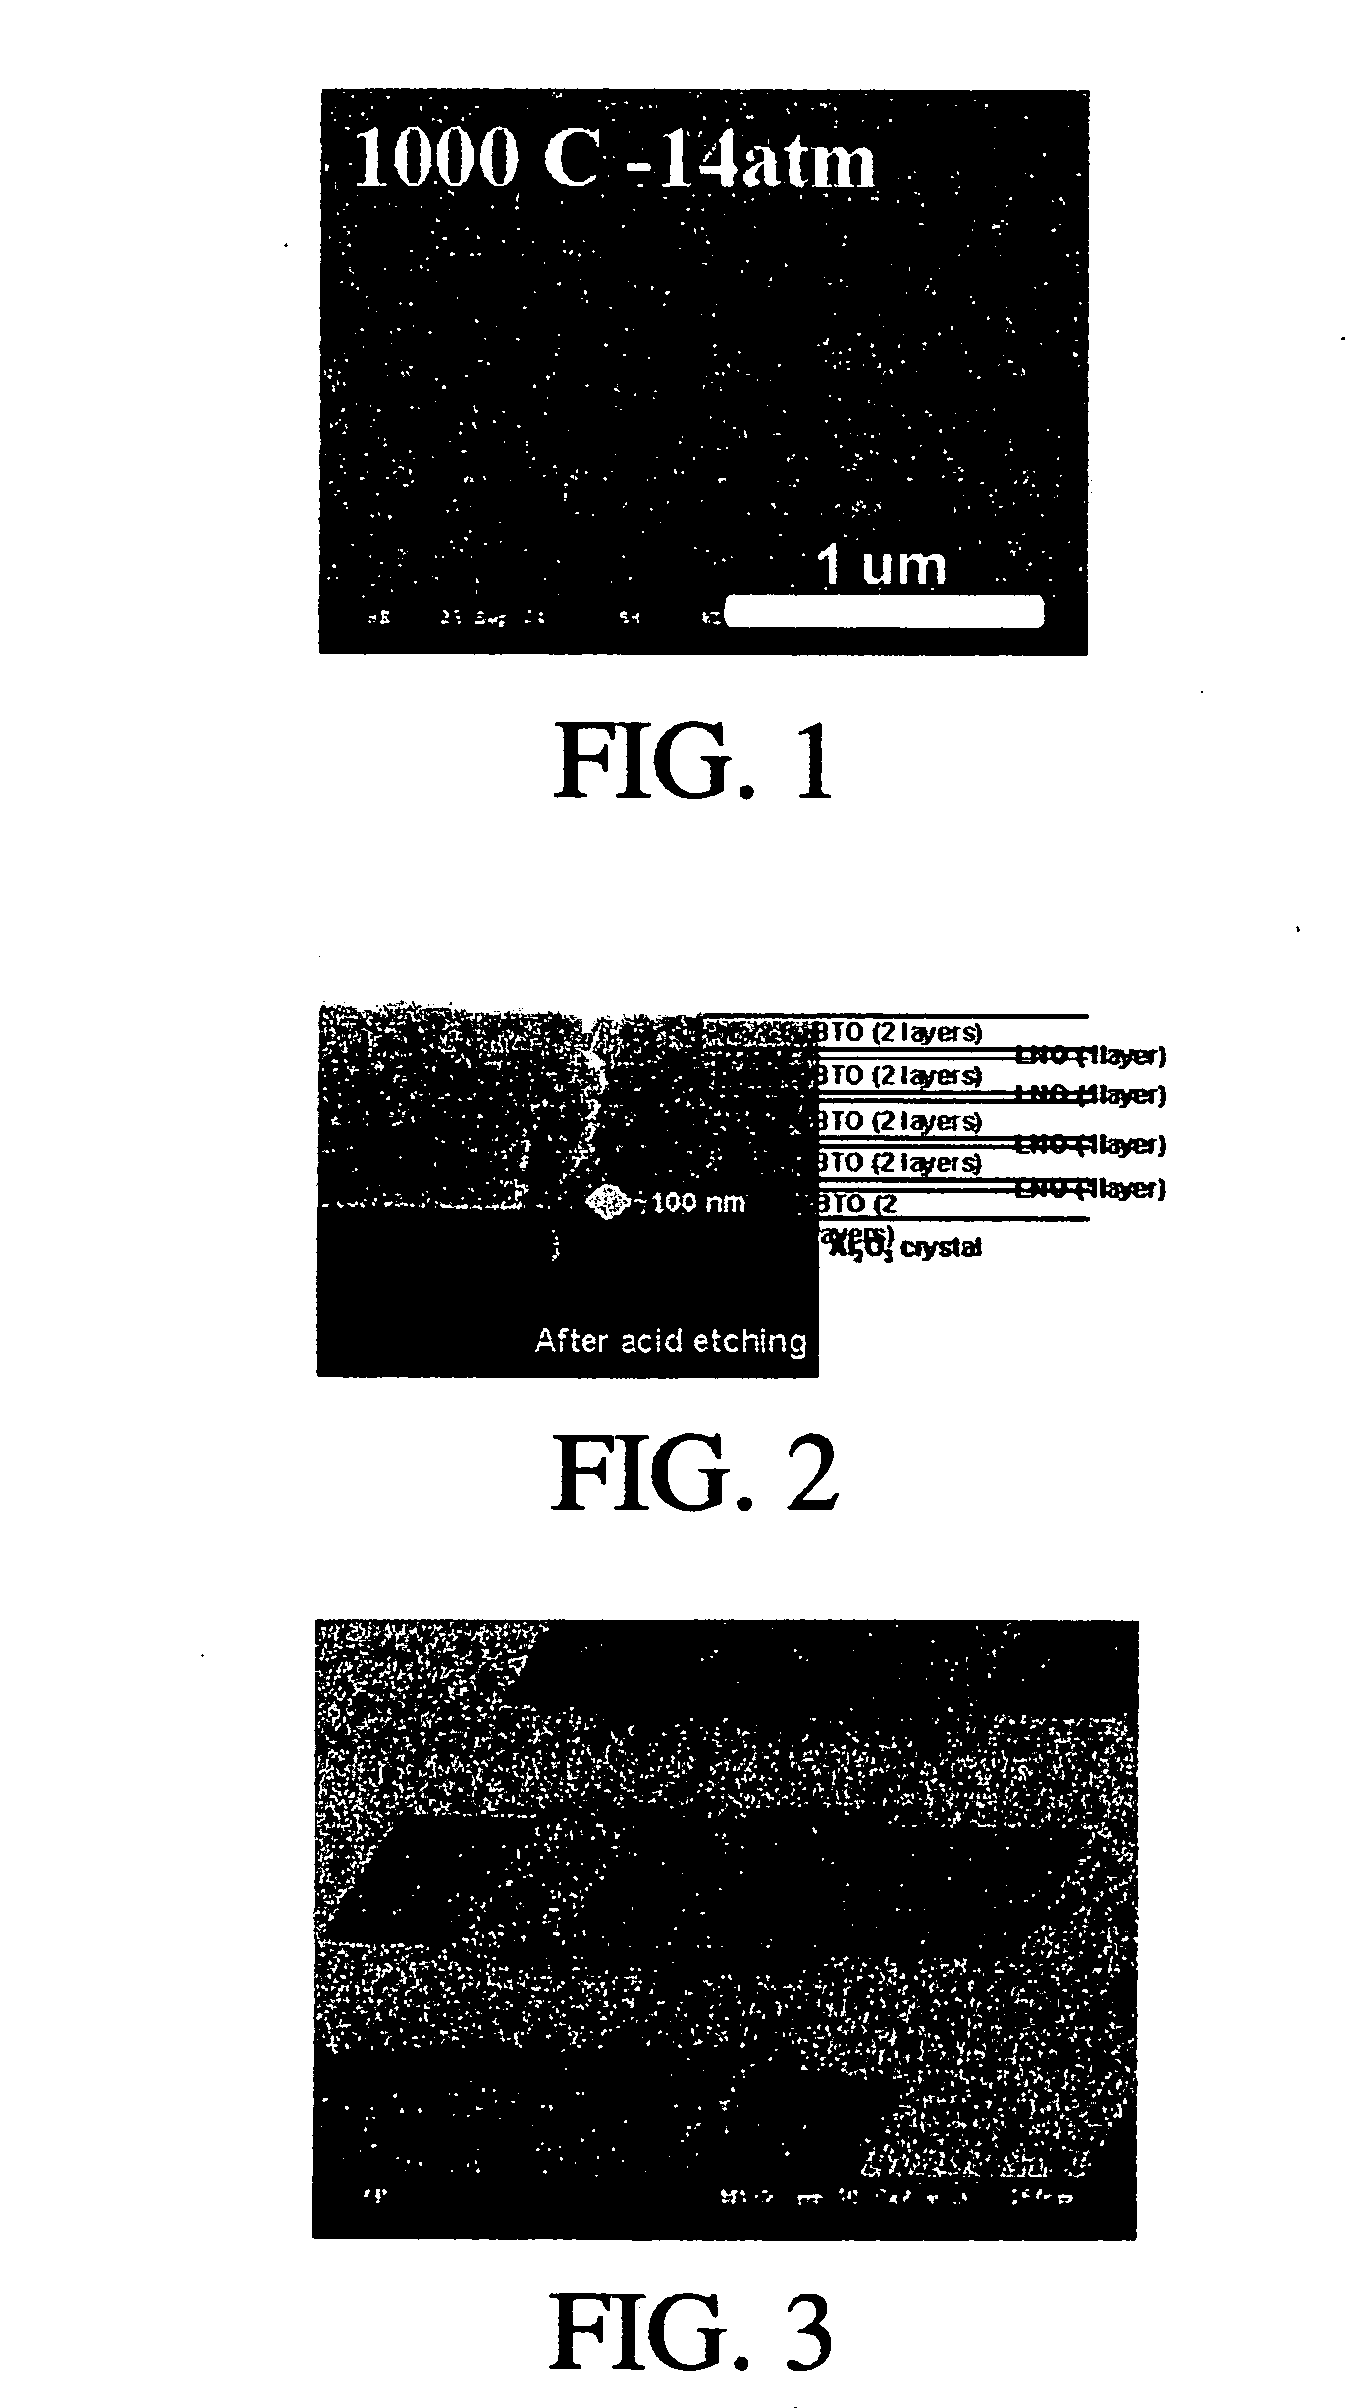 Microcontact printed thin film capacitors